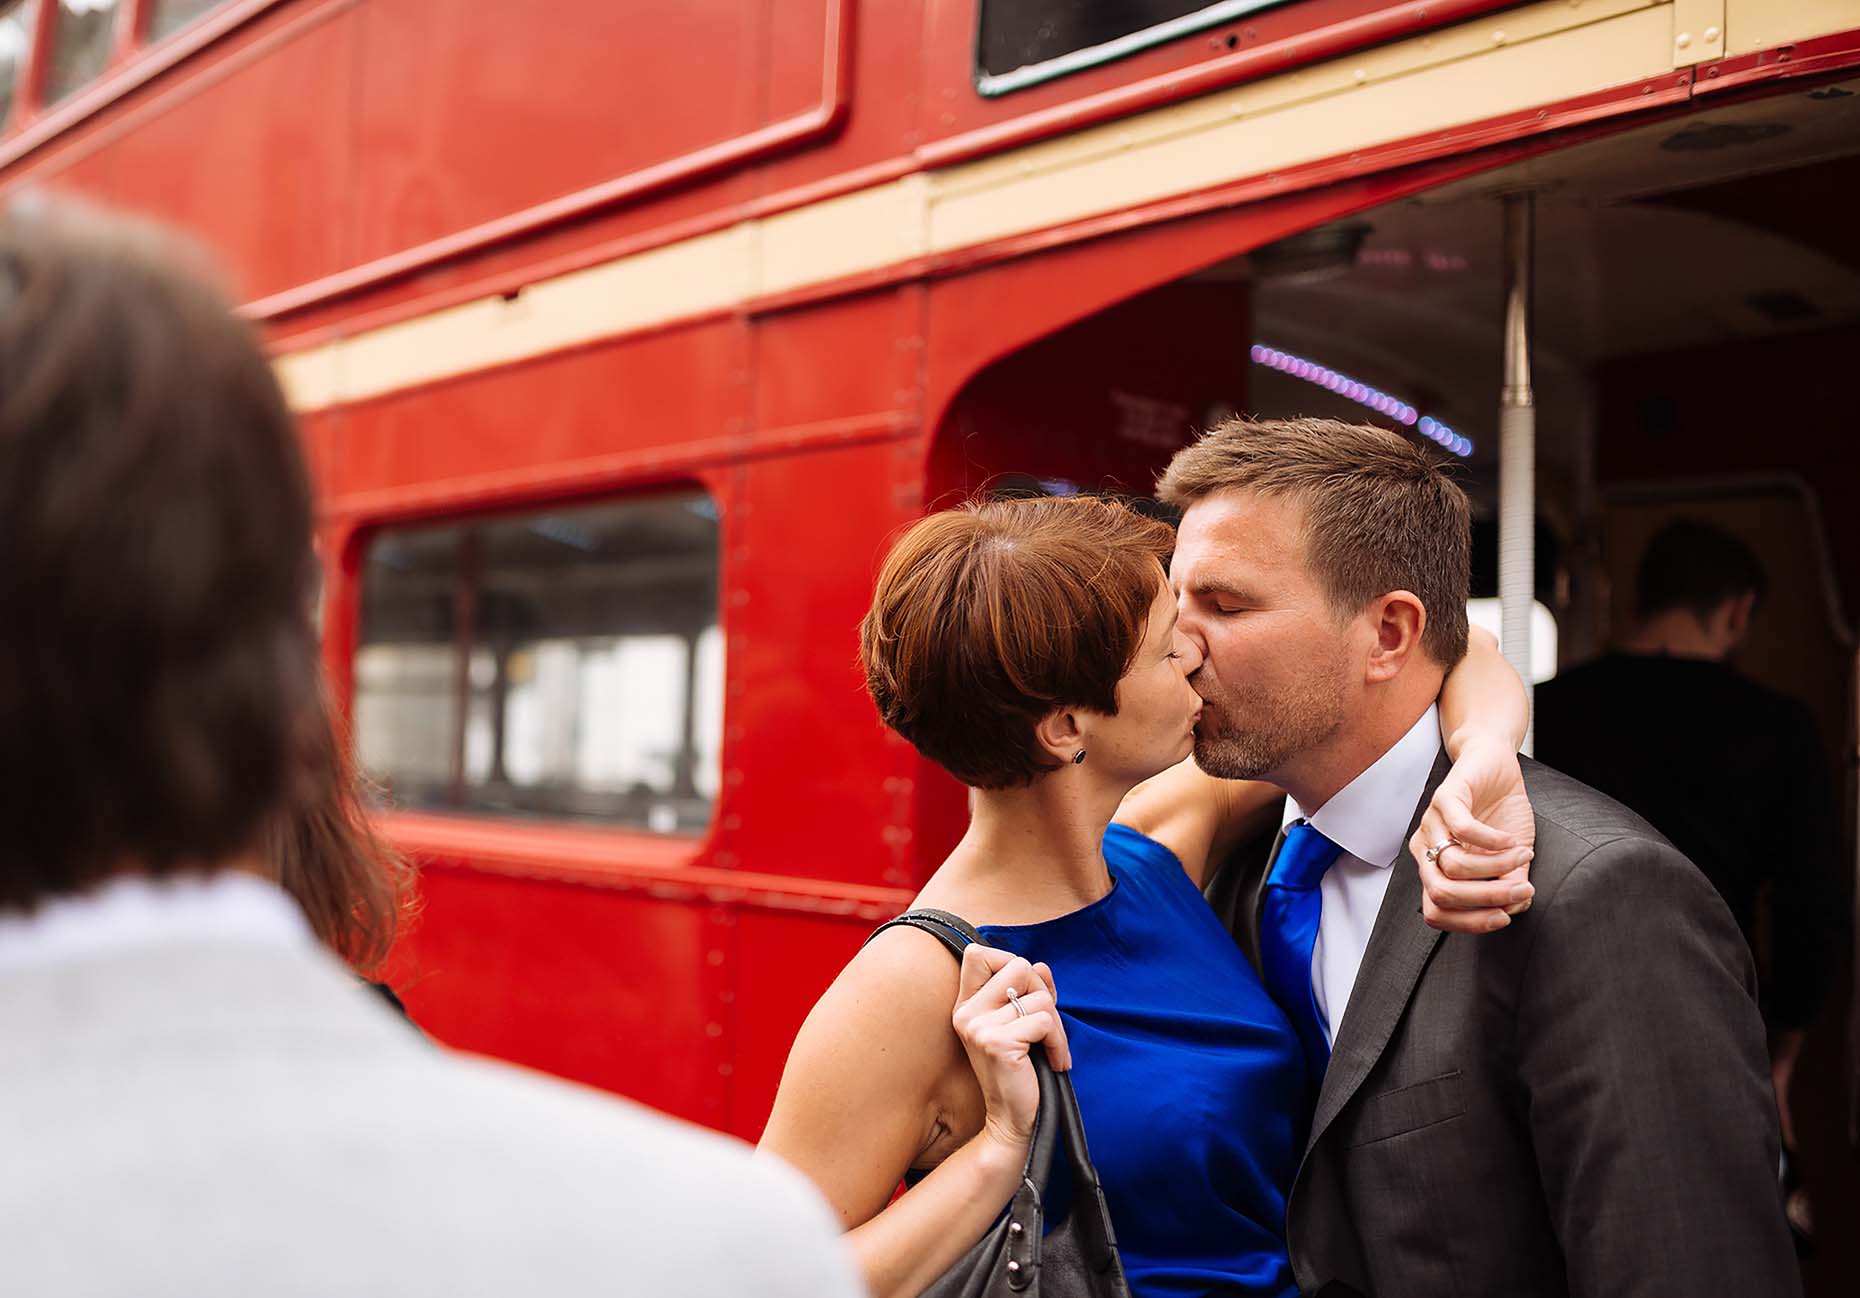 documentary-wedding-photography-red-london-bus-kiss-love-18